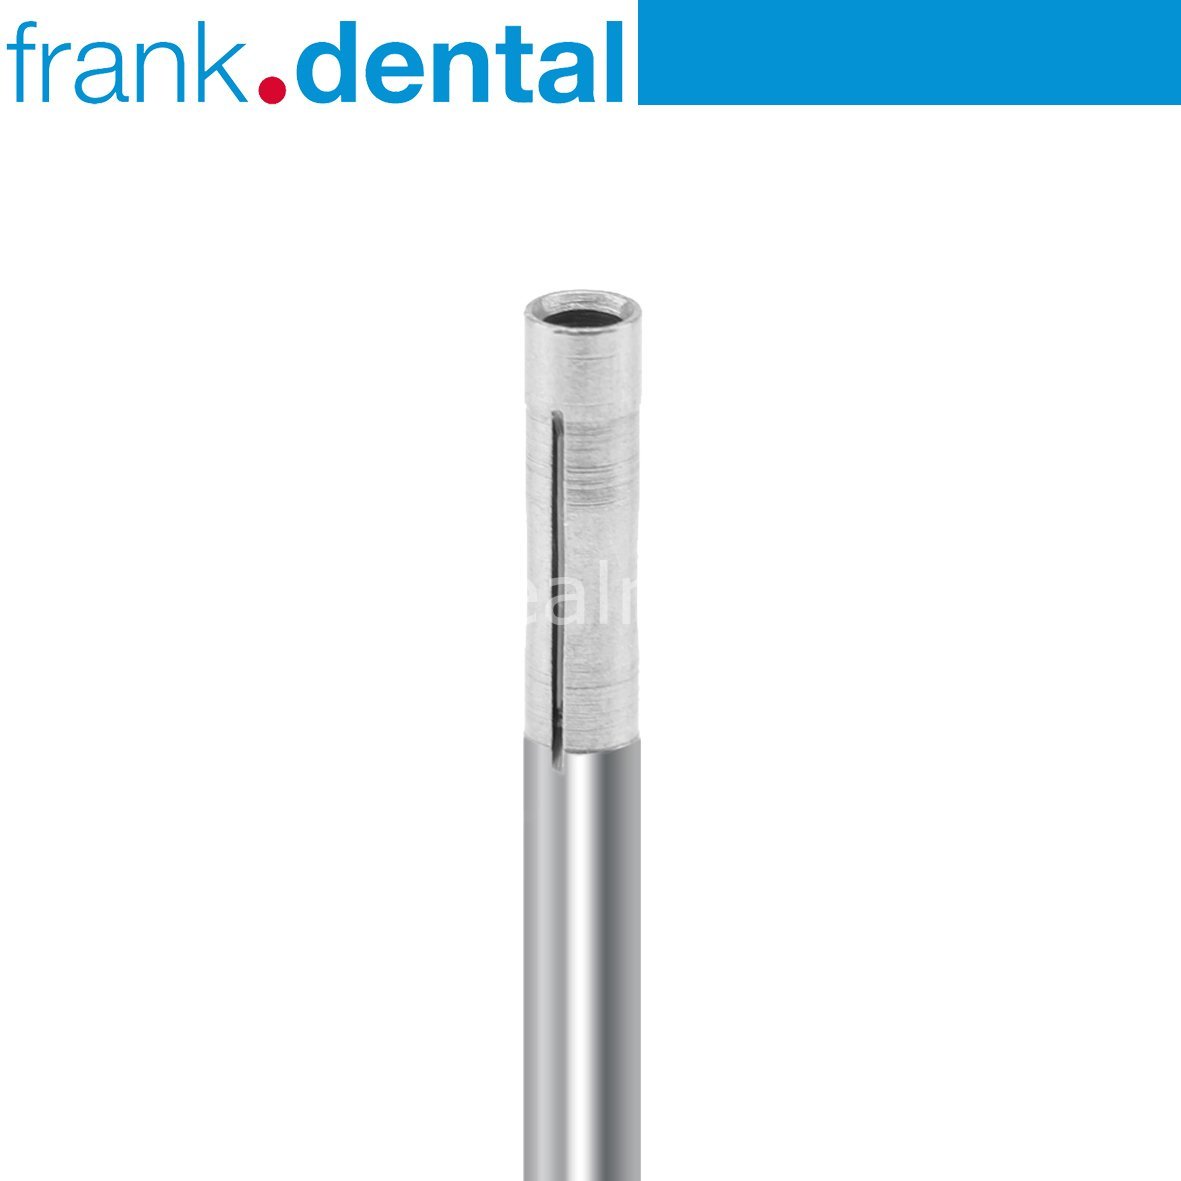 DentrealStore - Frank Dental Dental FG to RA Bur Converter Adaptor 2 pcs